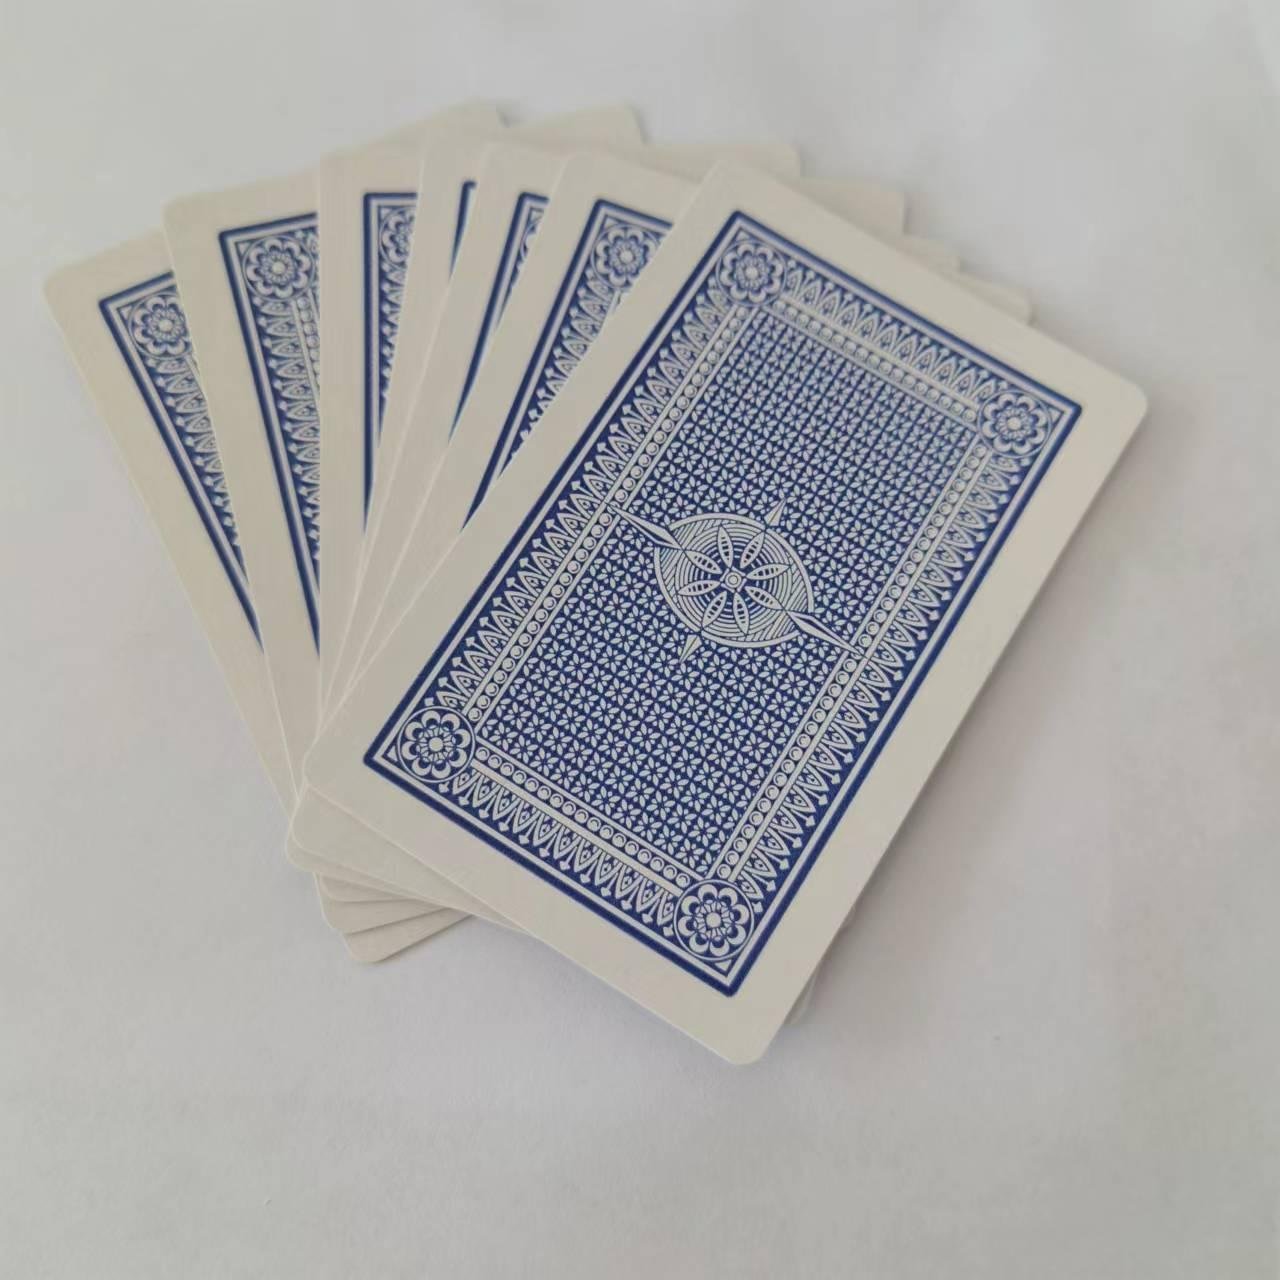 737 tui huang playing cards 4